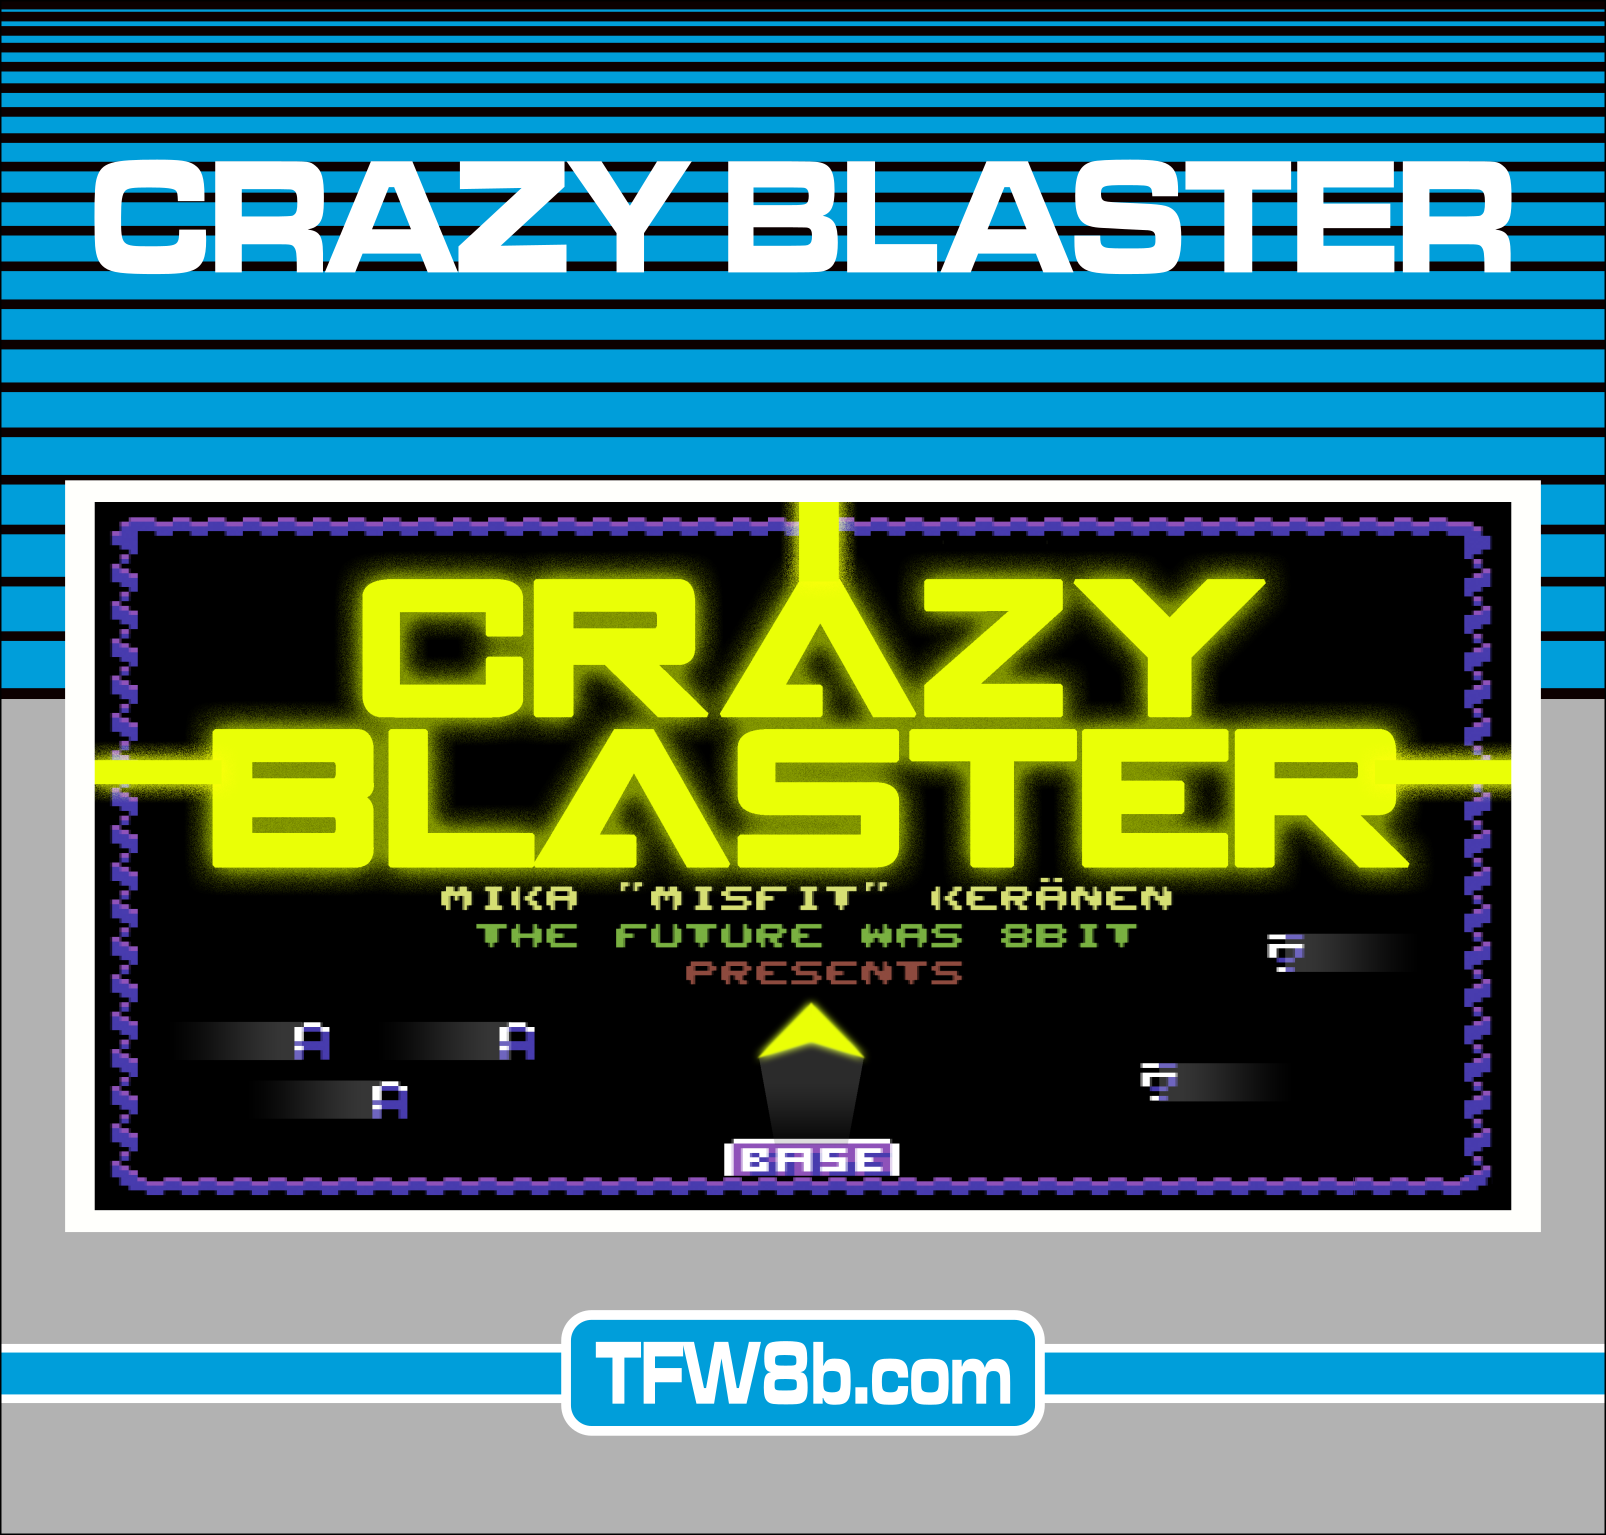 Crazy Blaster - C64 Cartridge